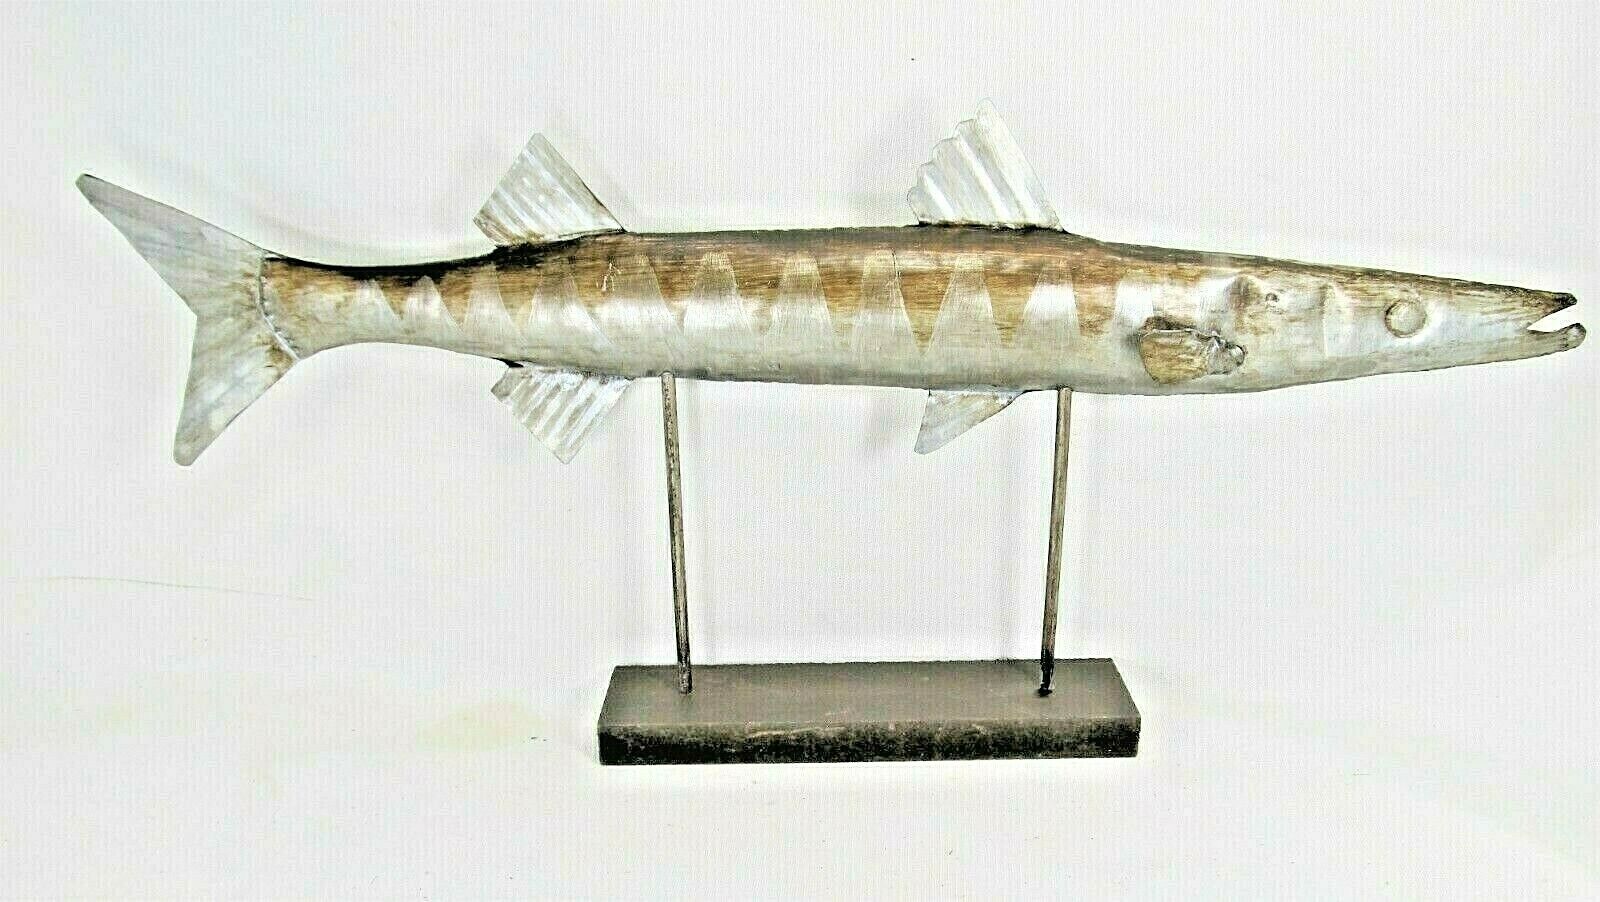 Barracuda Rustic Metal Figurine on stand sealife decor